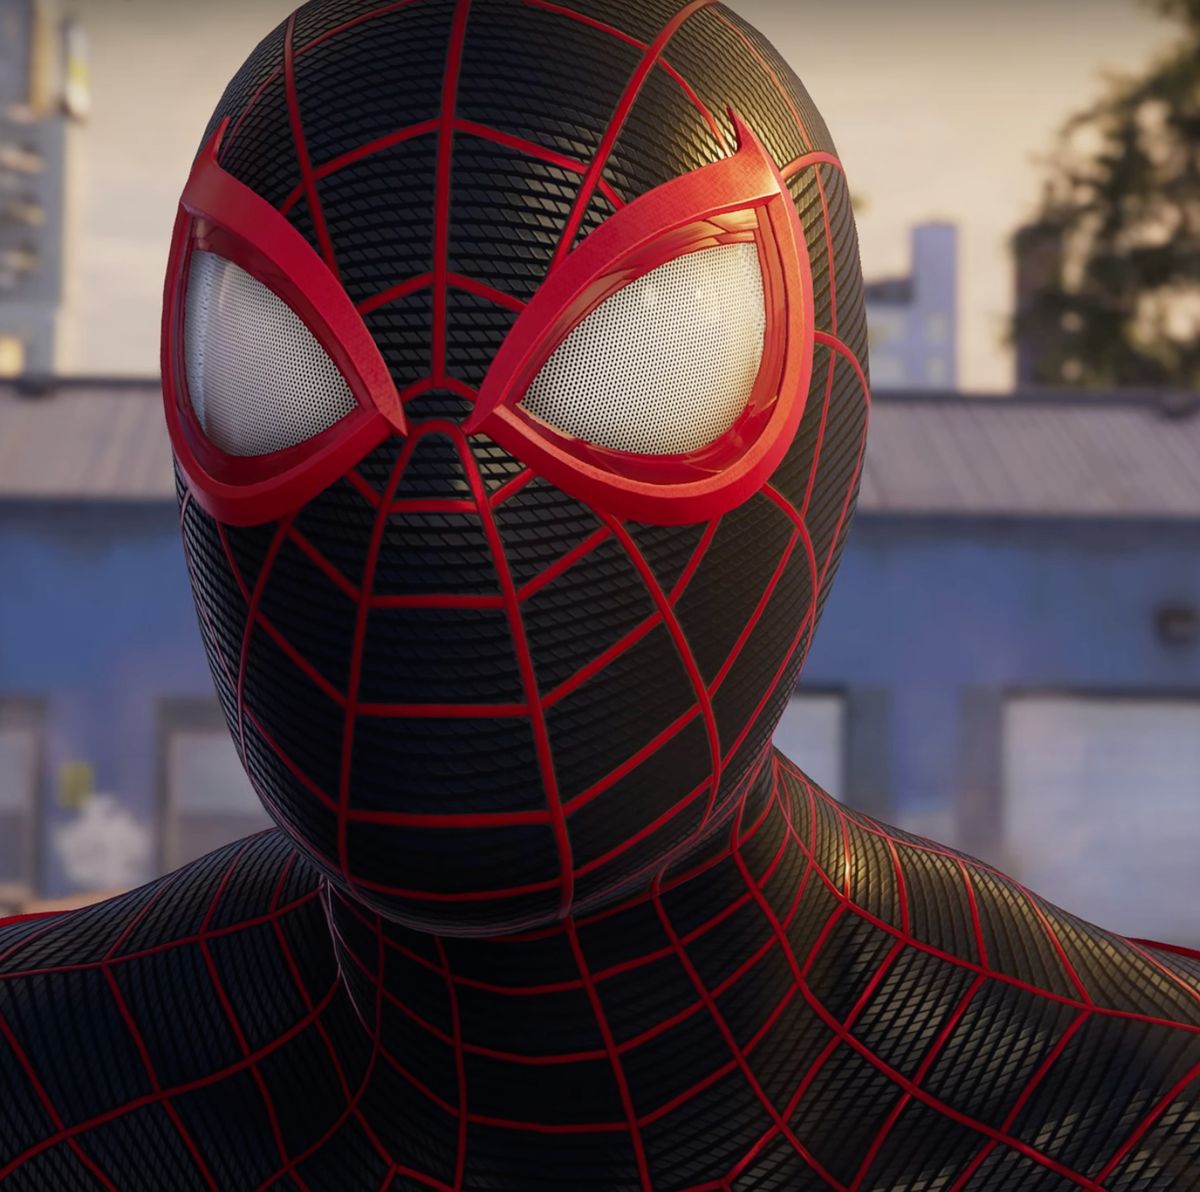 Marvel's Spider-Man 2 gameplay revealed